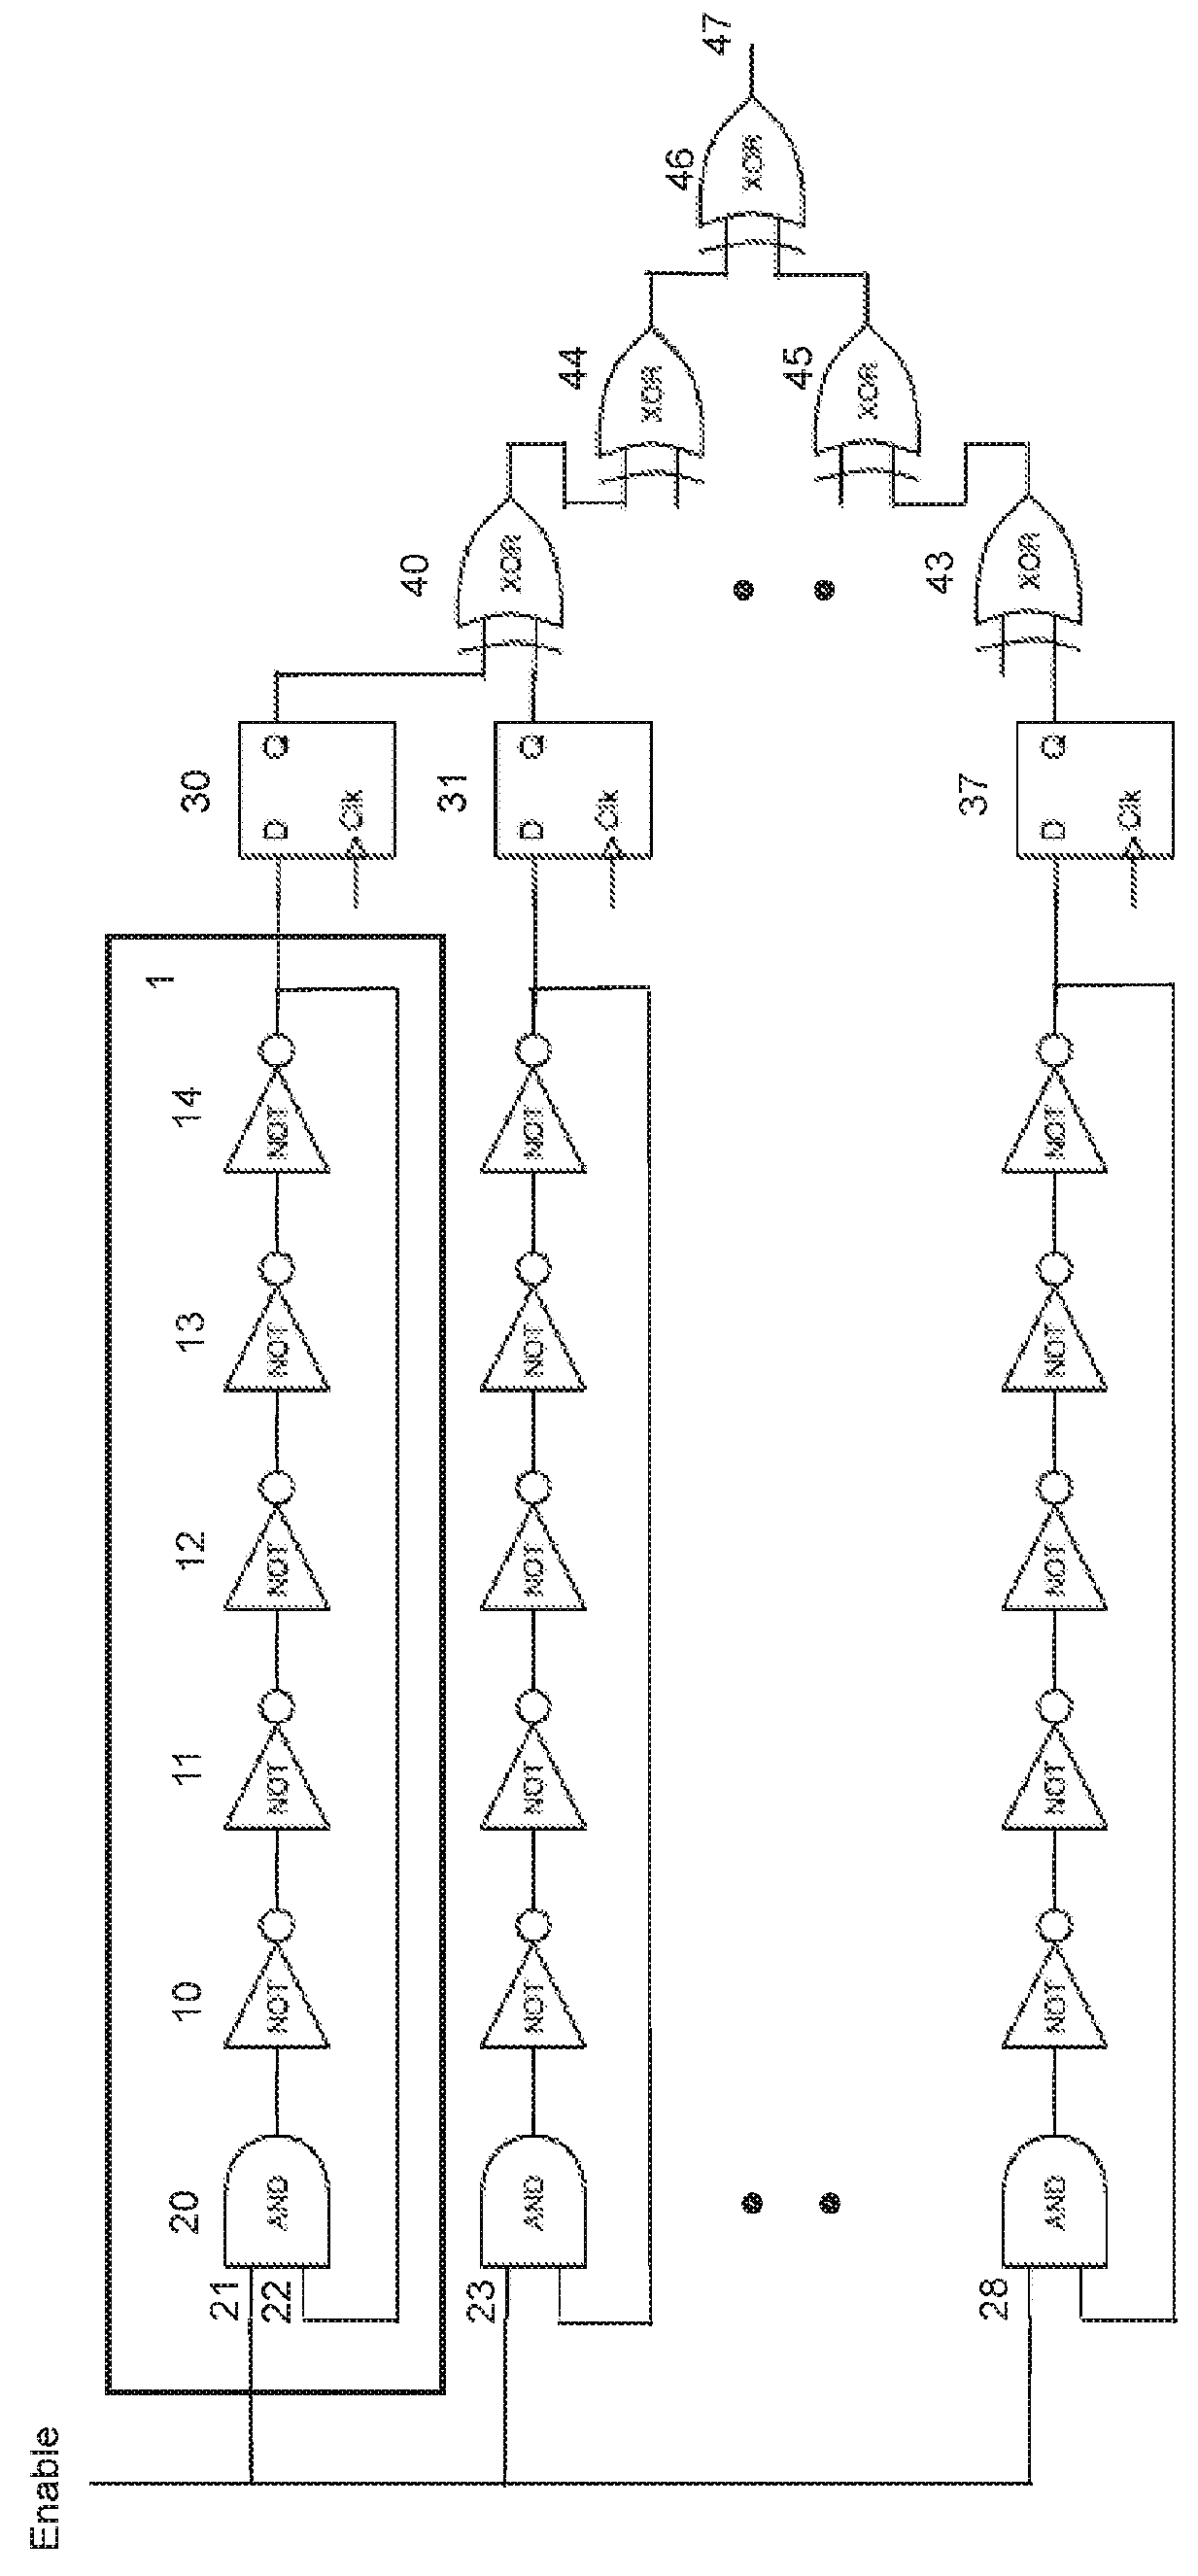 Random number generator using ring oscillators with initial delay